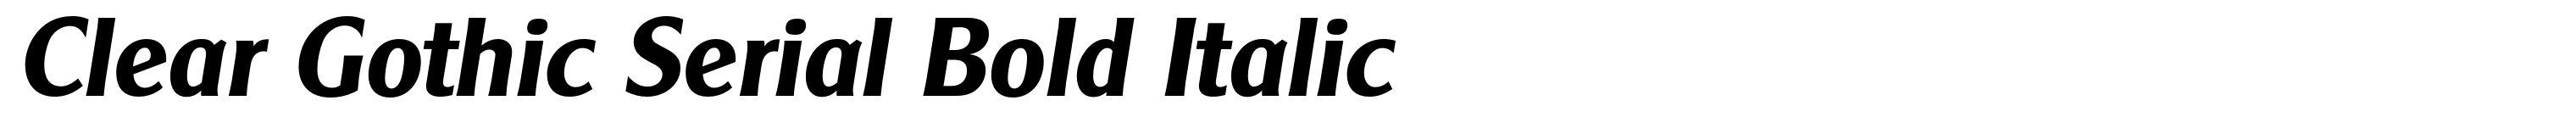 Clear Gothic Serial Bold Italic